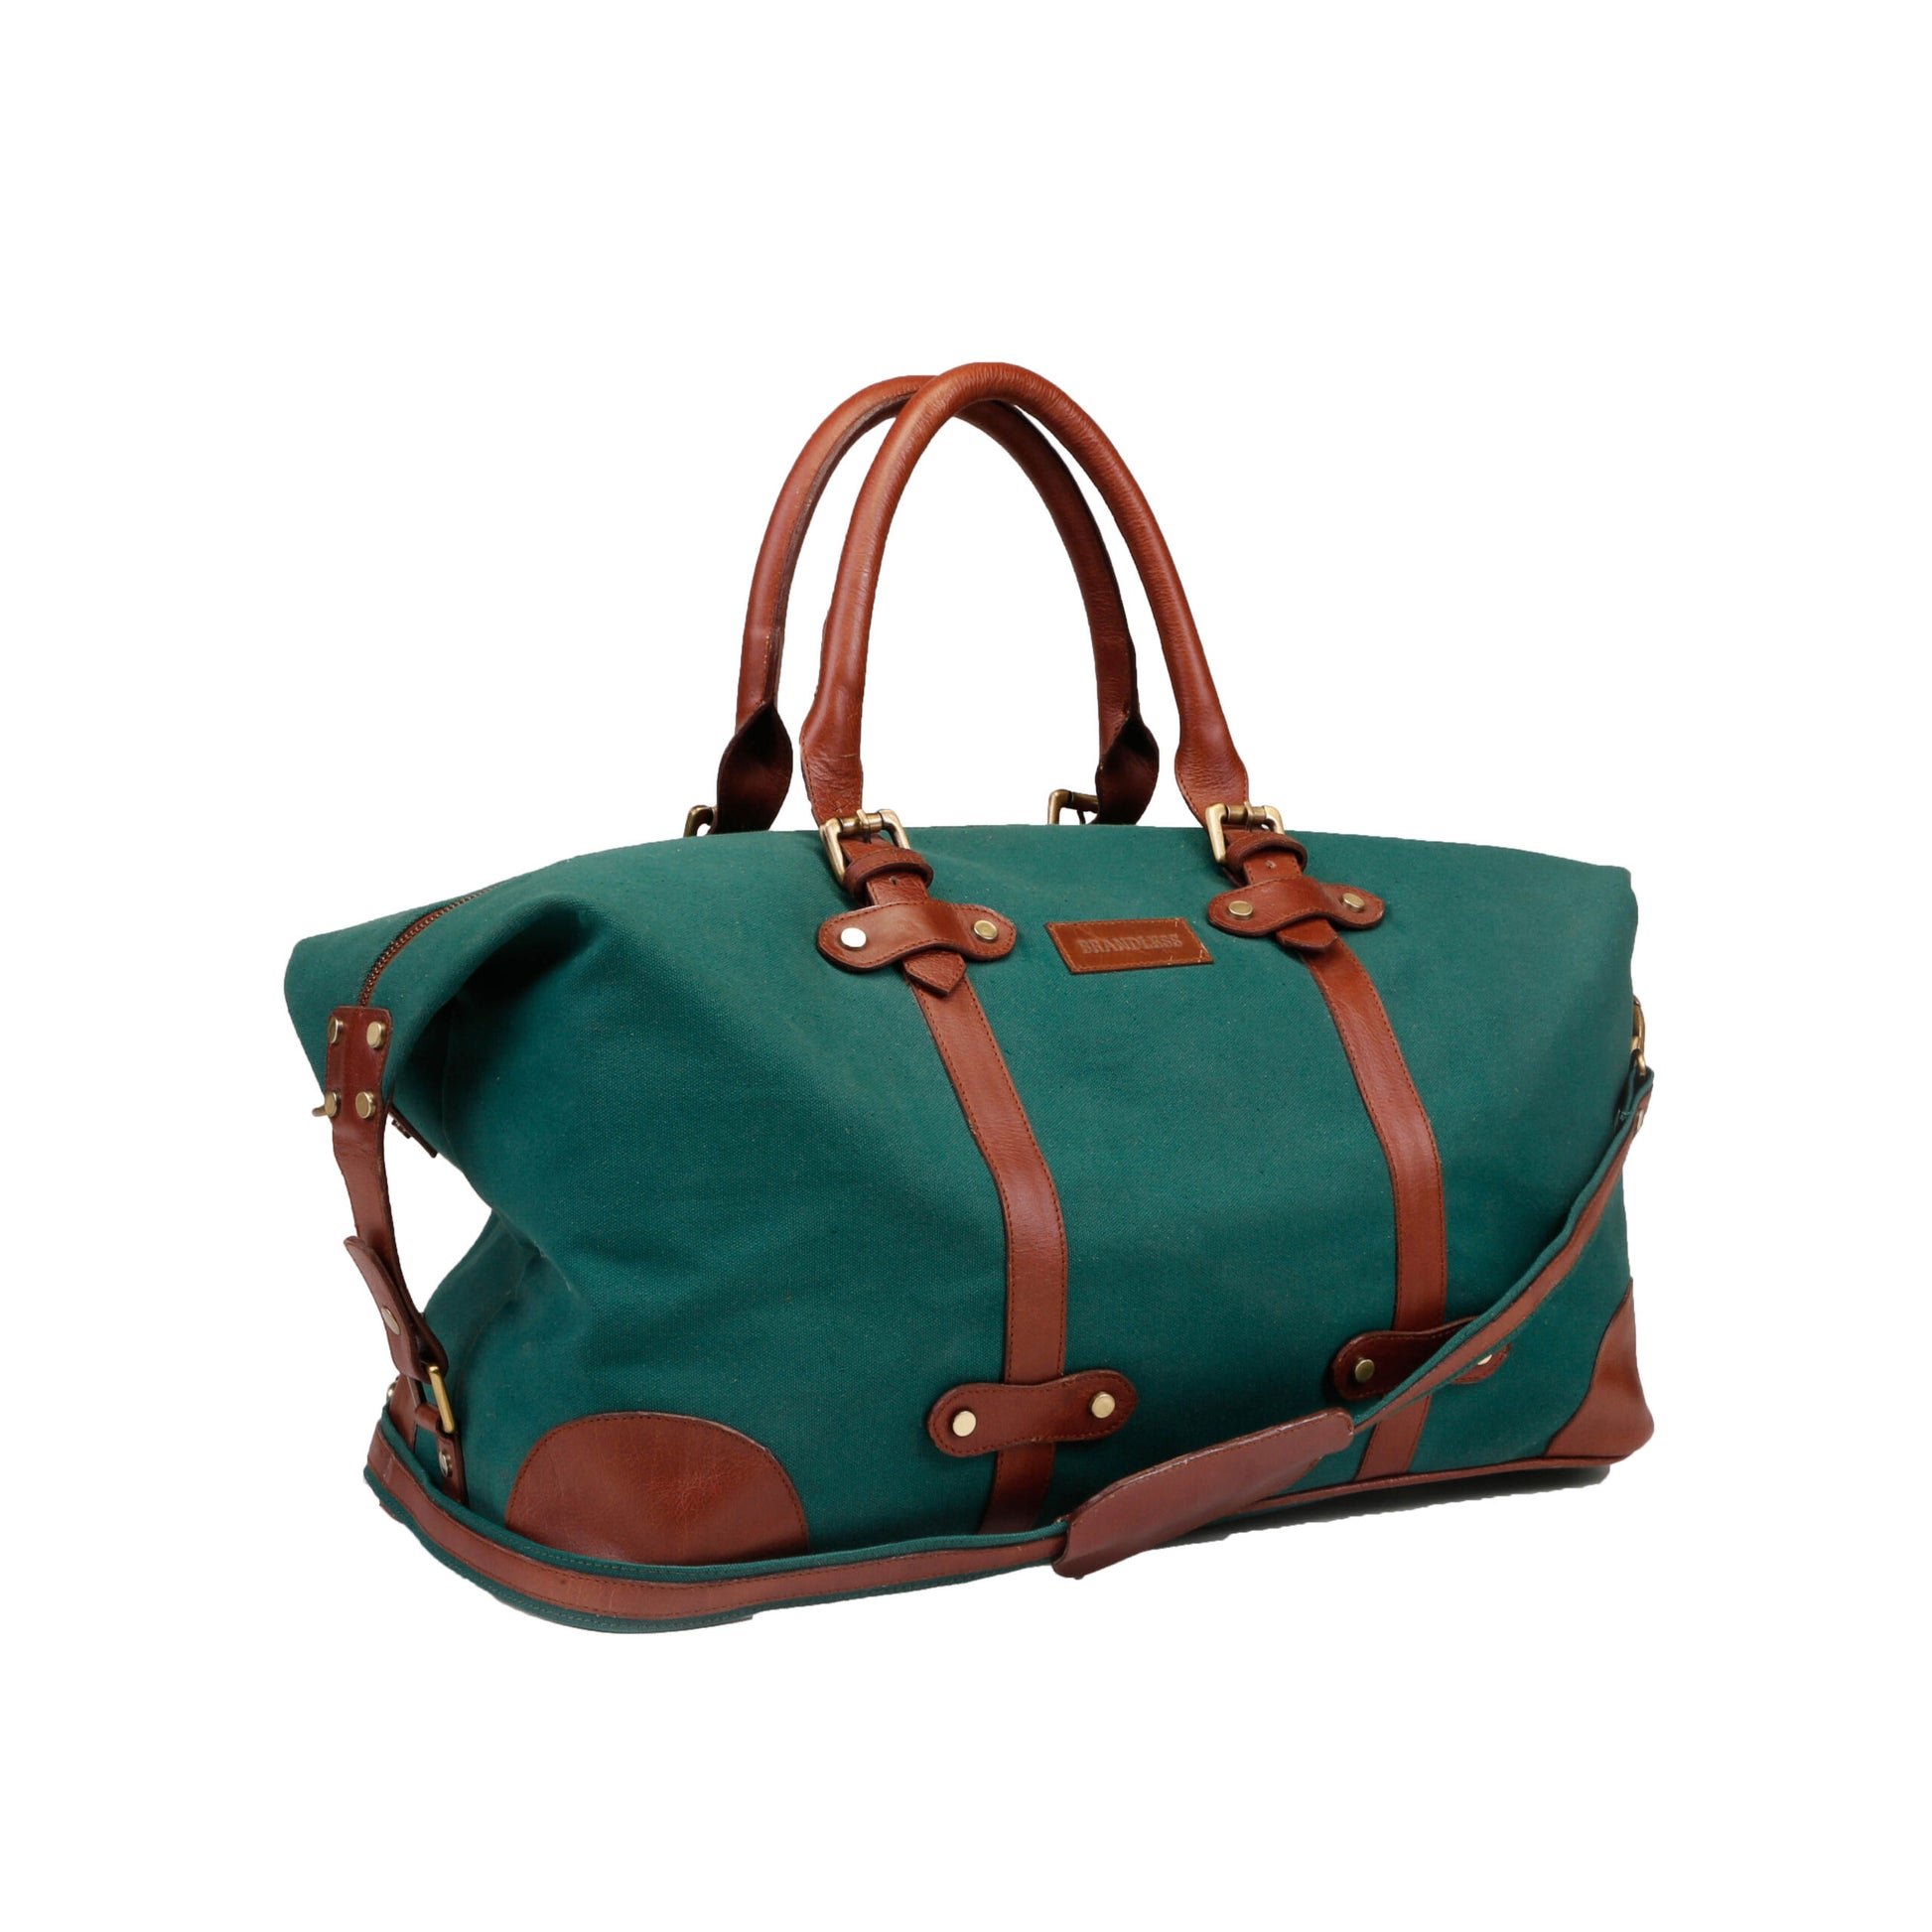 Discoverer Duffel Bag - Khaki & Brown – Brandless